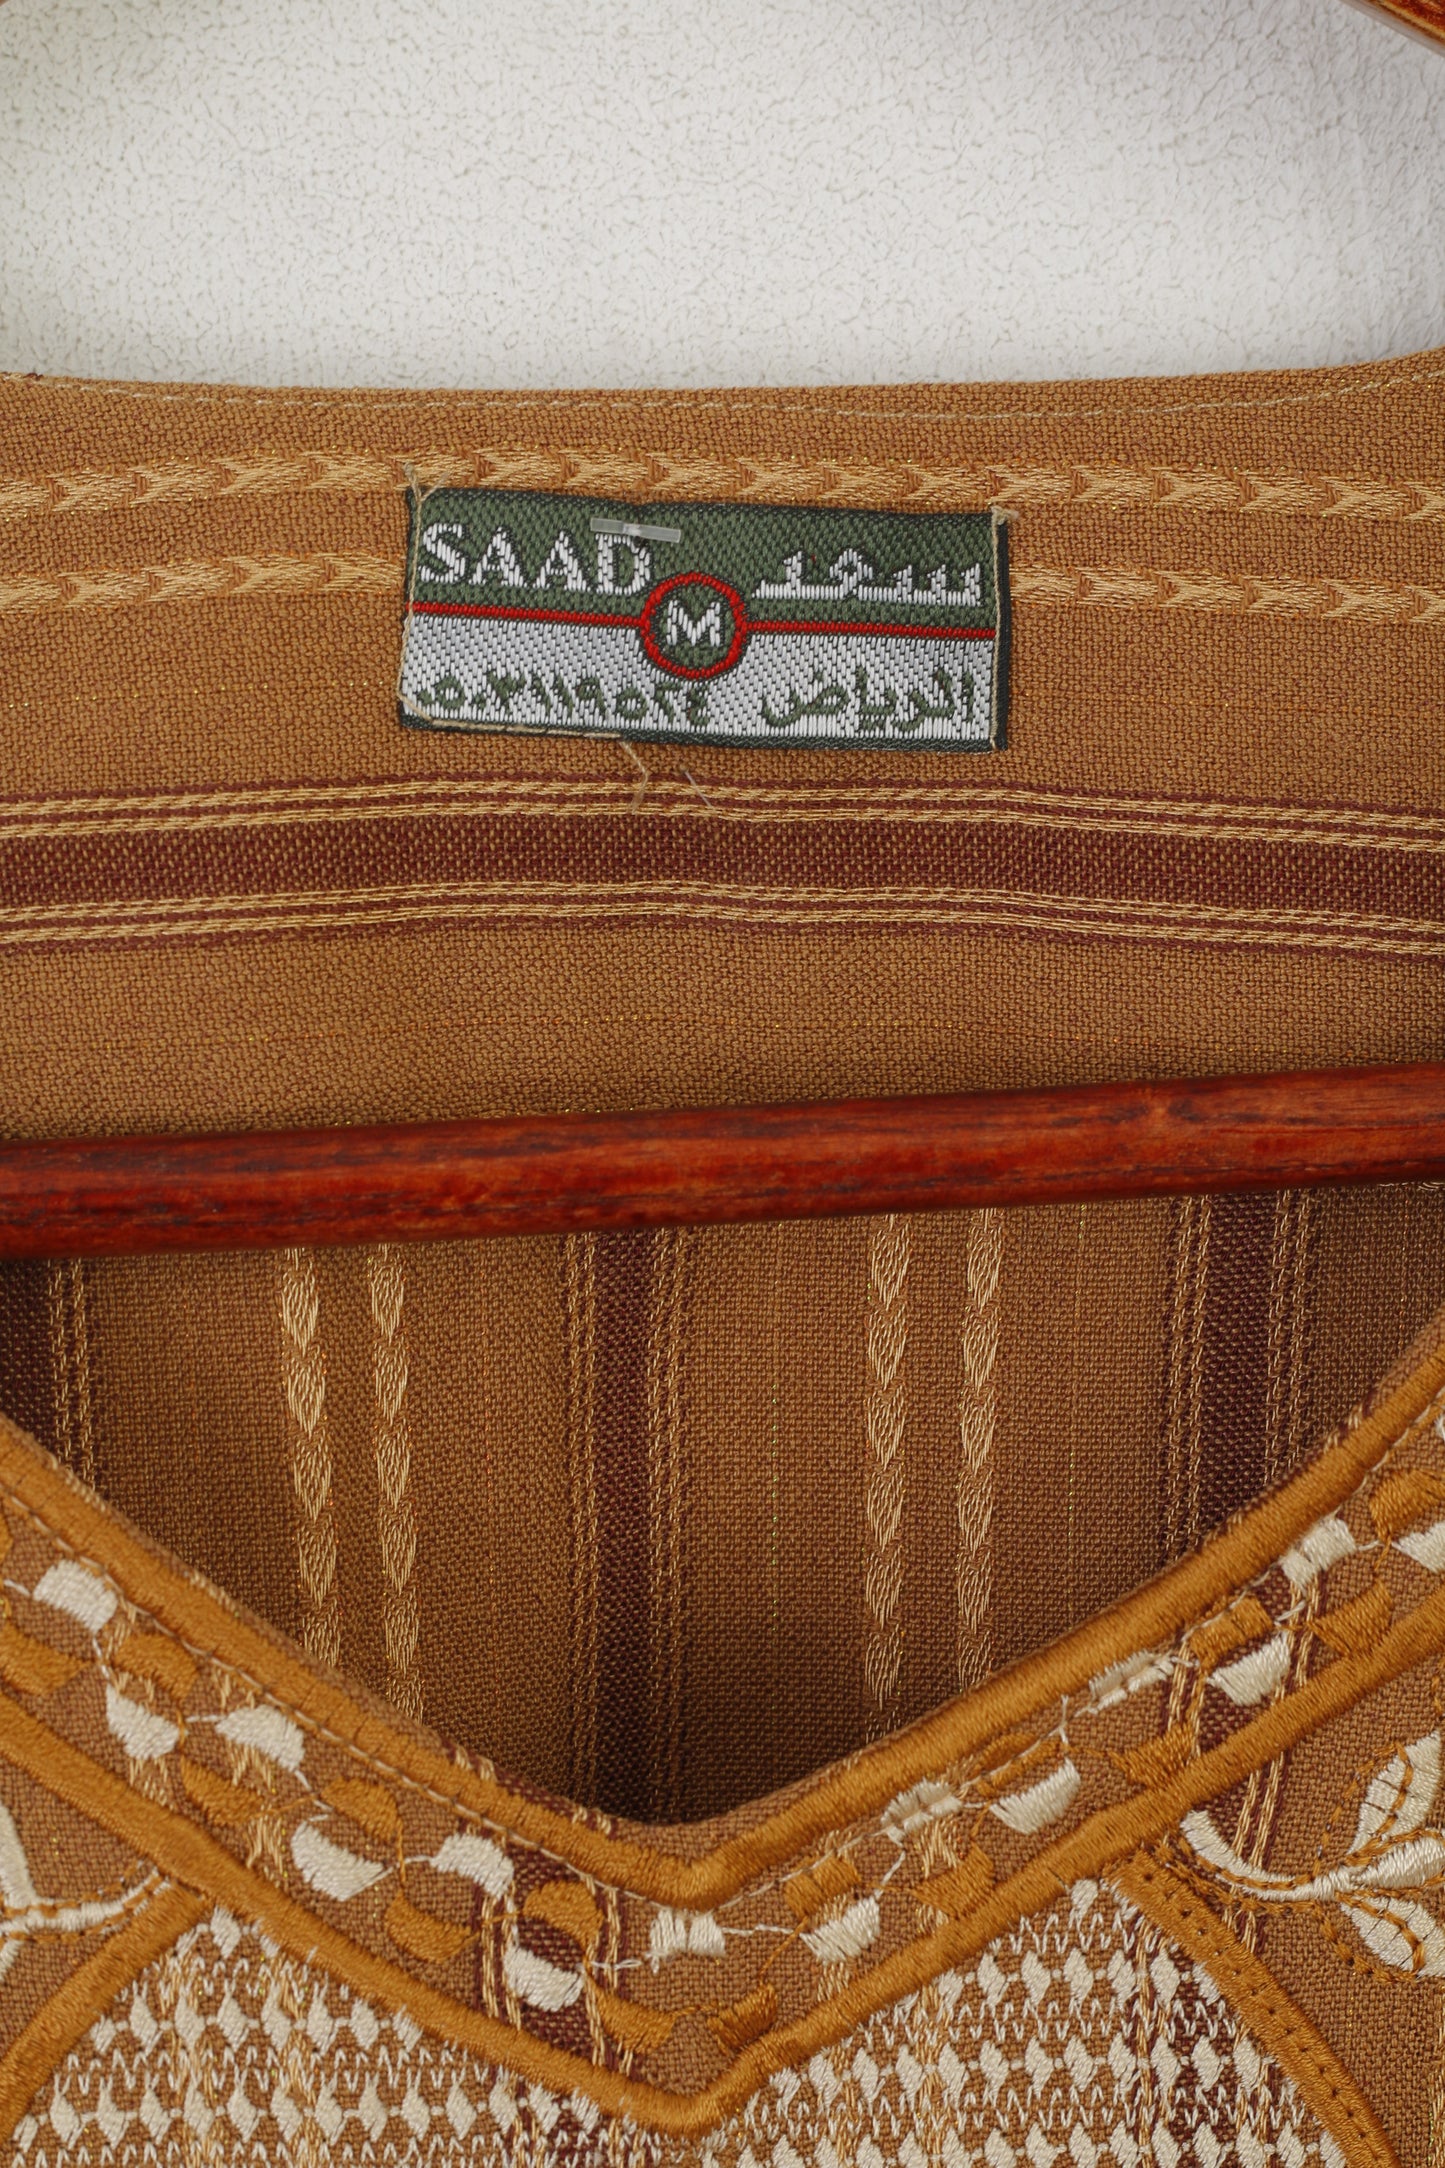 SAAD Women M Dress Brown Hindu Long Striped Emroidered Shoulder Pads Abaya